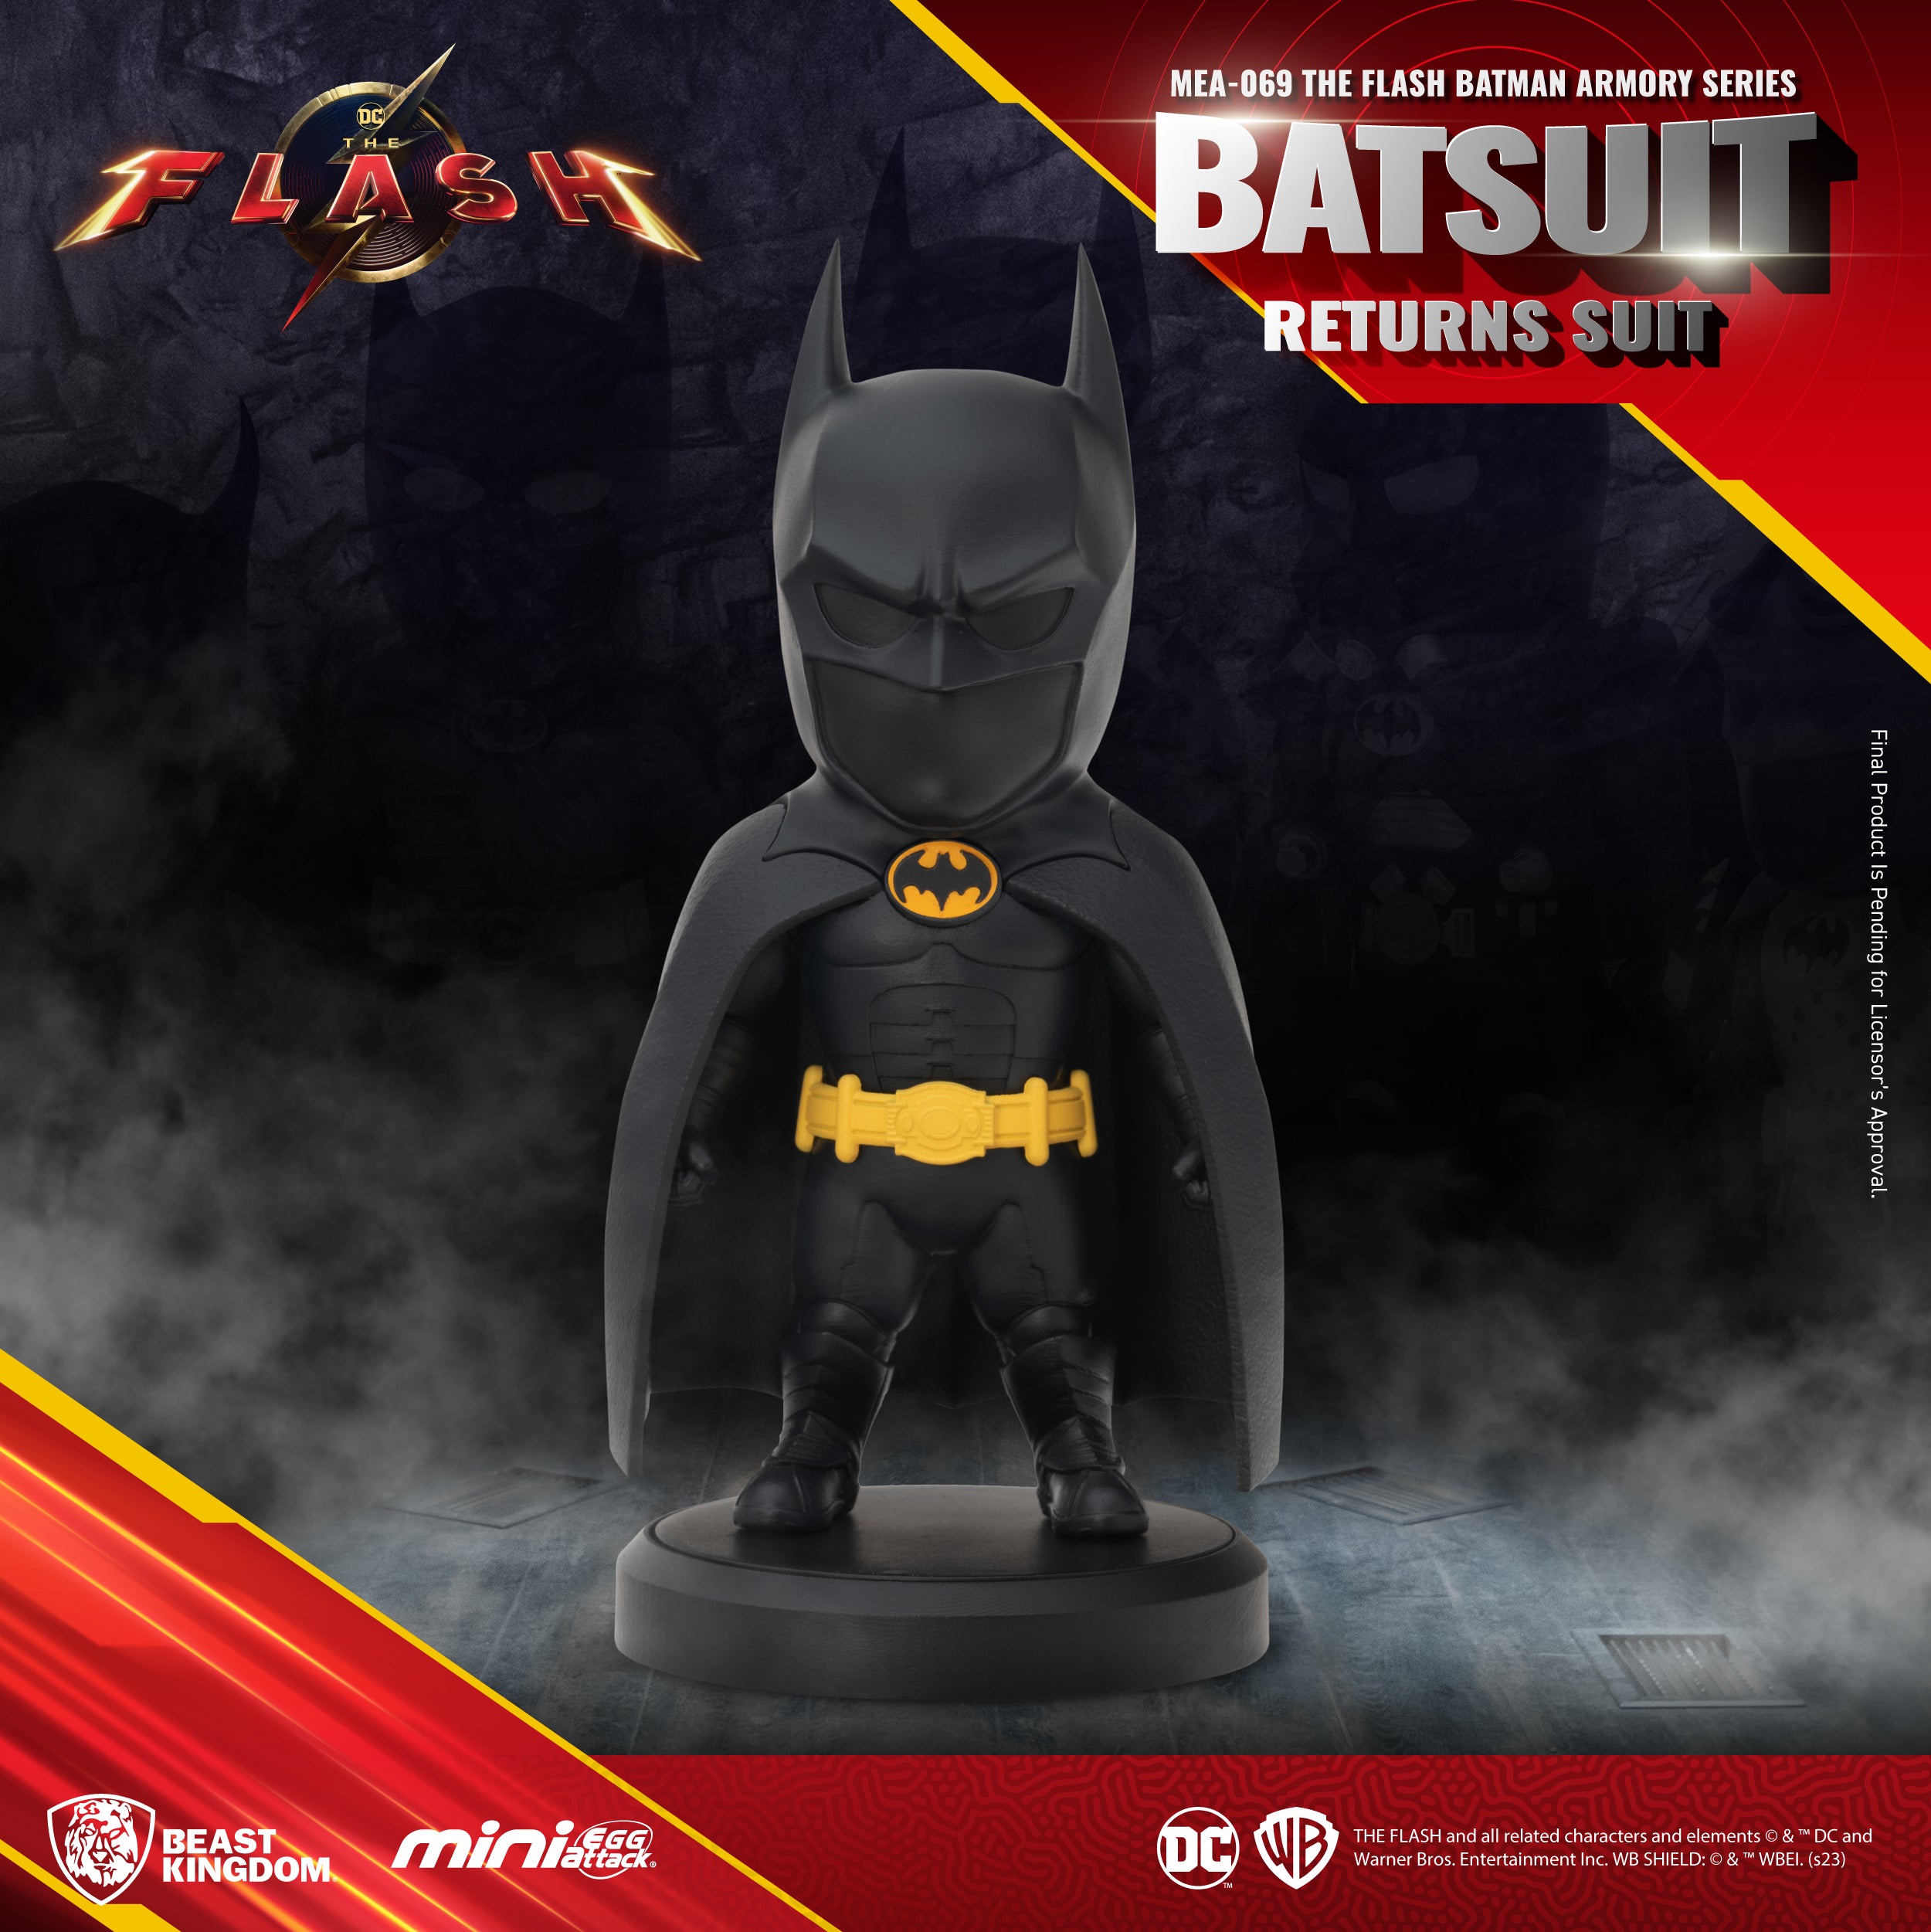 Beast Kingdom MEA-069 The Flash series batman armory Blind box Set Mini Egg Attack Figure